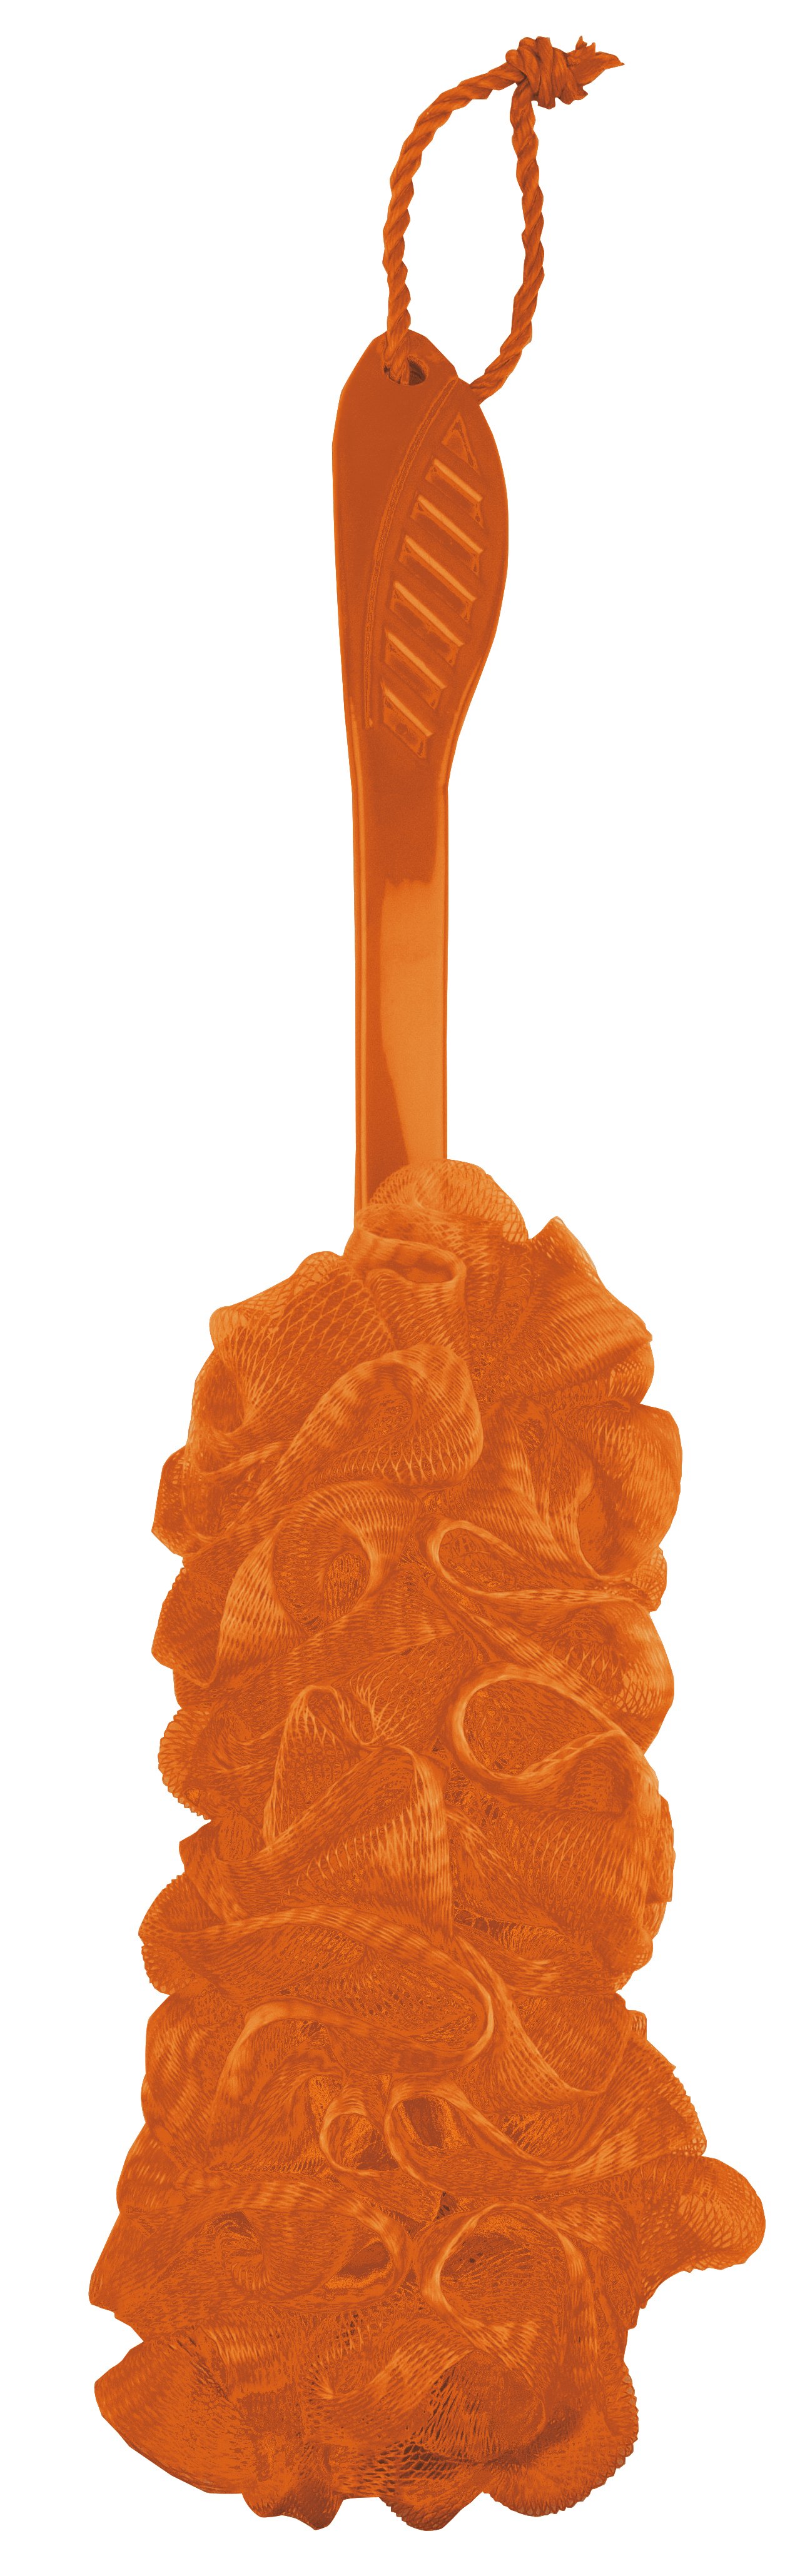 Щетка для душа и мягкого массажа Titania, оранжевый (9110 оранж) - фото 1